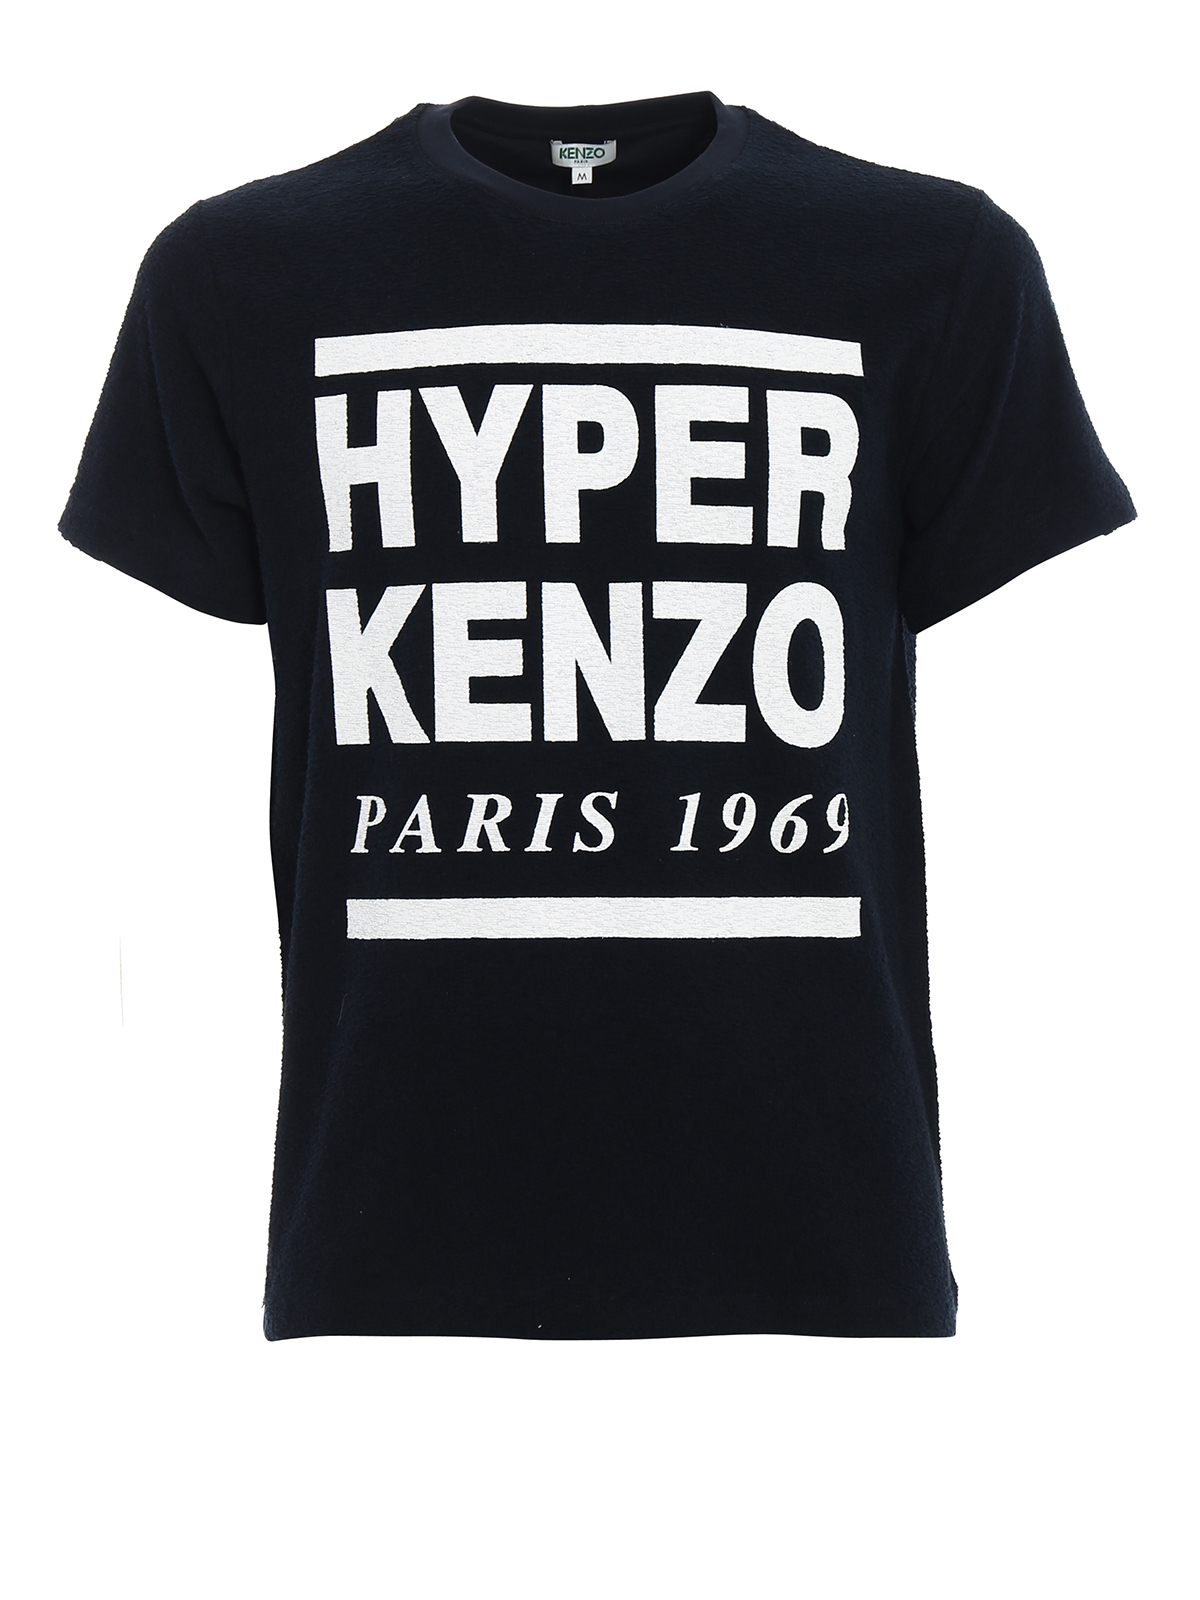 kenzo hyper t shirt